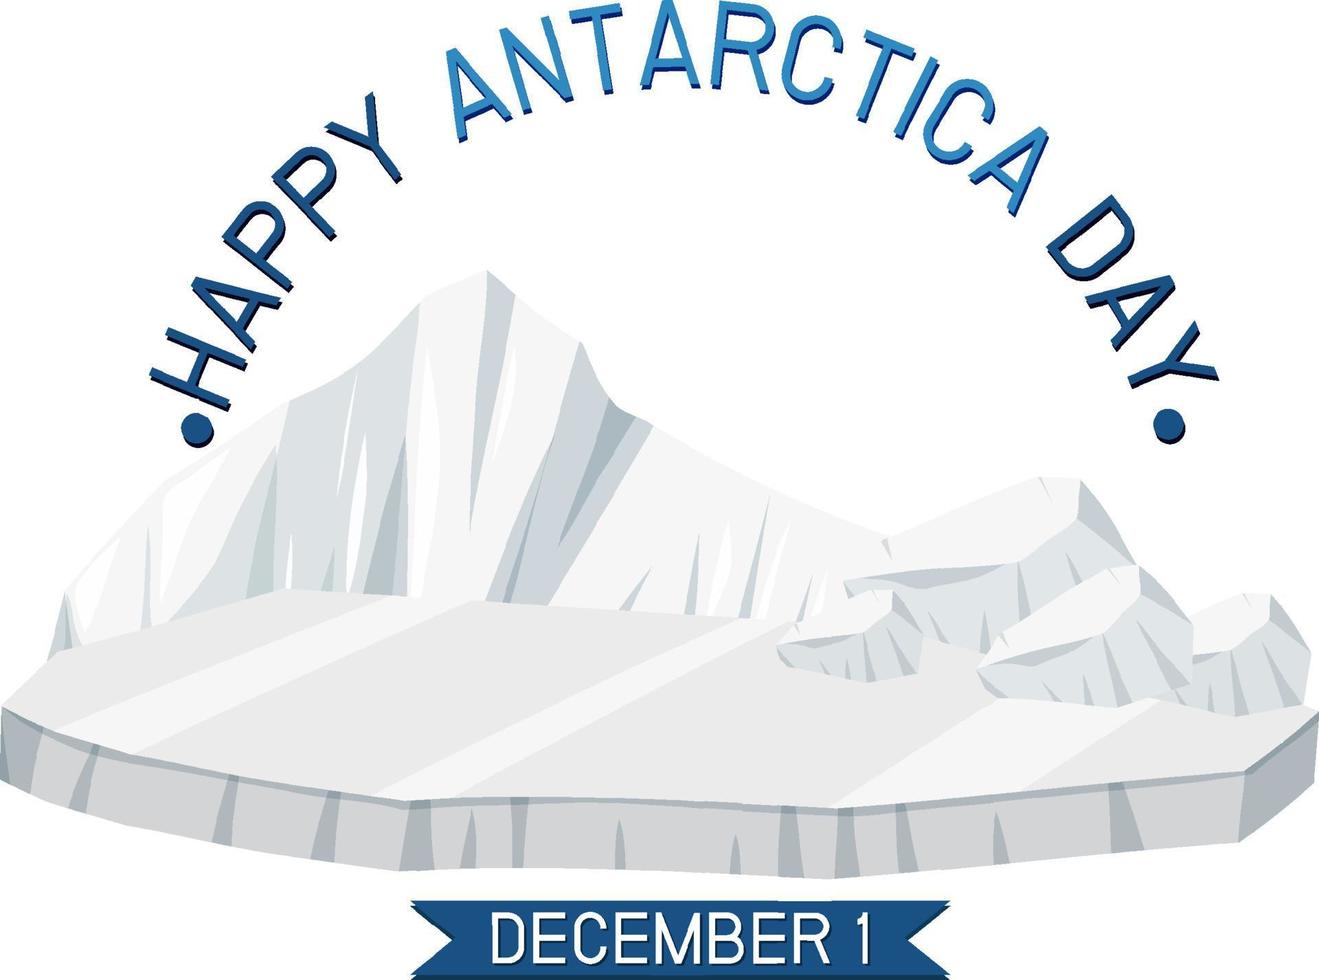 Antarctica day poster template vector